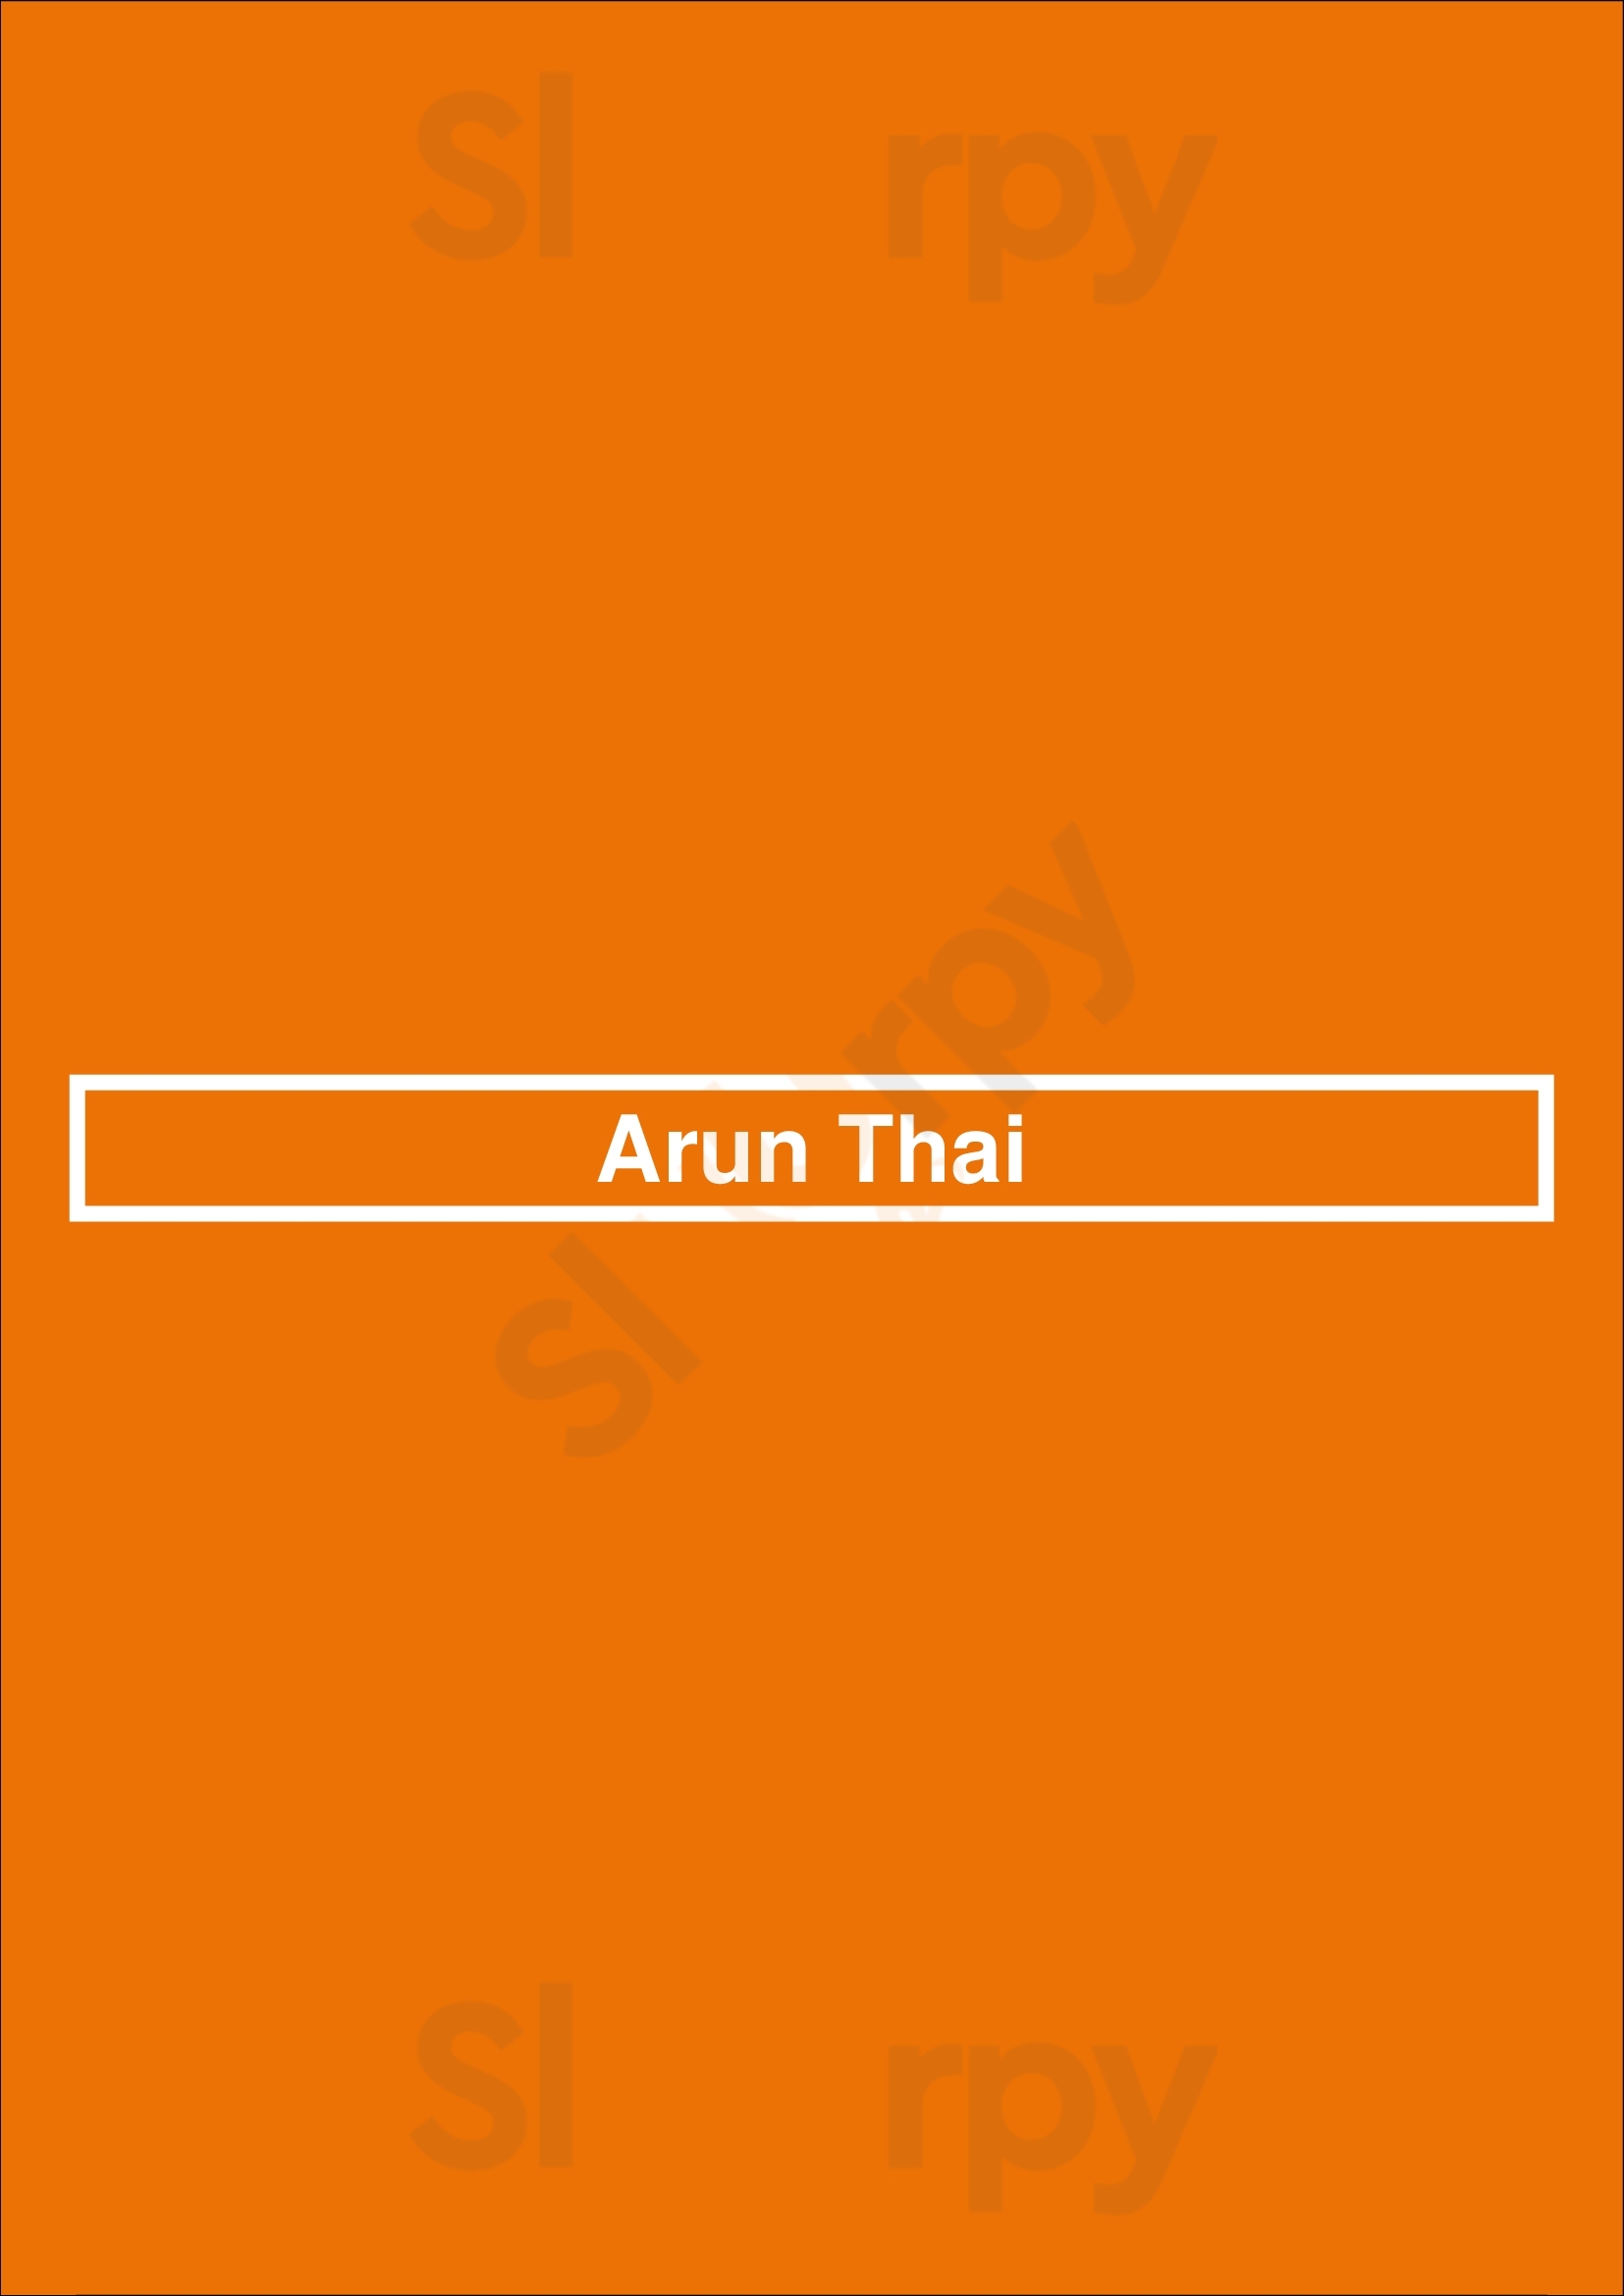 Arun Thai Katwijk Menu - 1